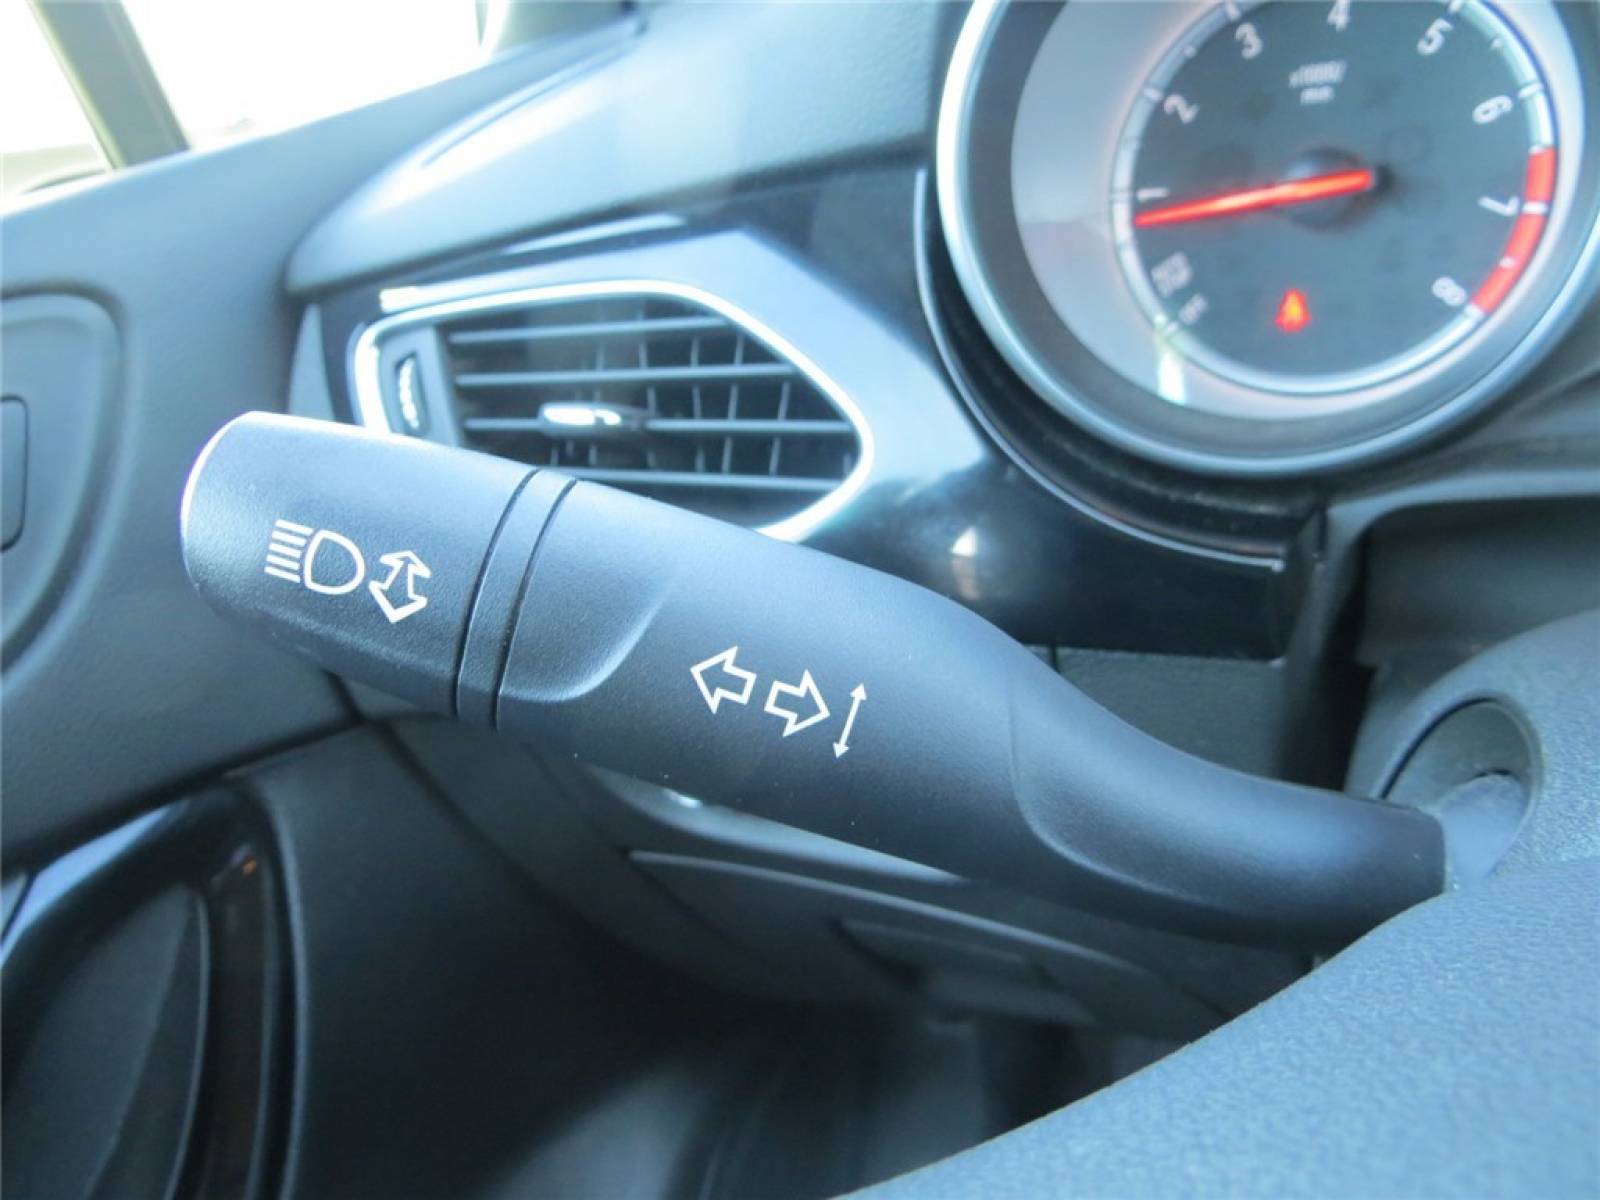 OPEL Astra 1.4 Turbo 150 ch Start/Stop BVA6 - véhicule d'occasion - Groupe Guillet - Opel Magicauto - Chalon-sur-Saône - 71380 - Saint-Marcel - 19